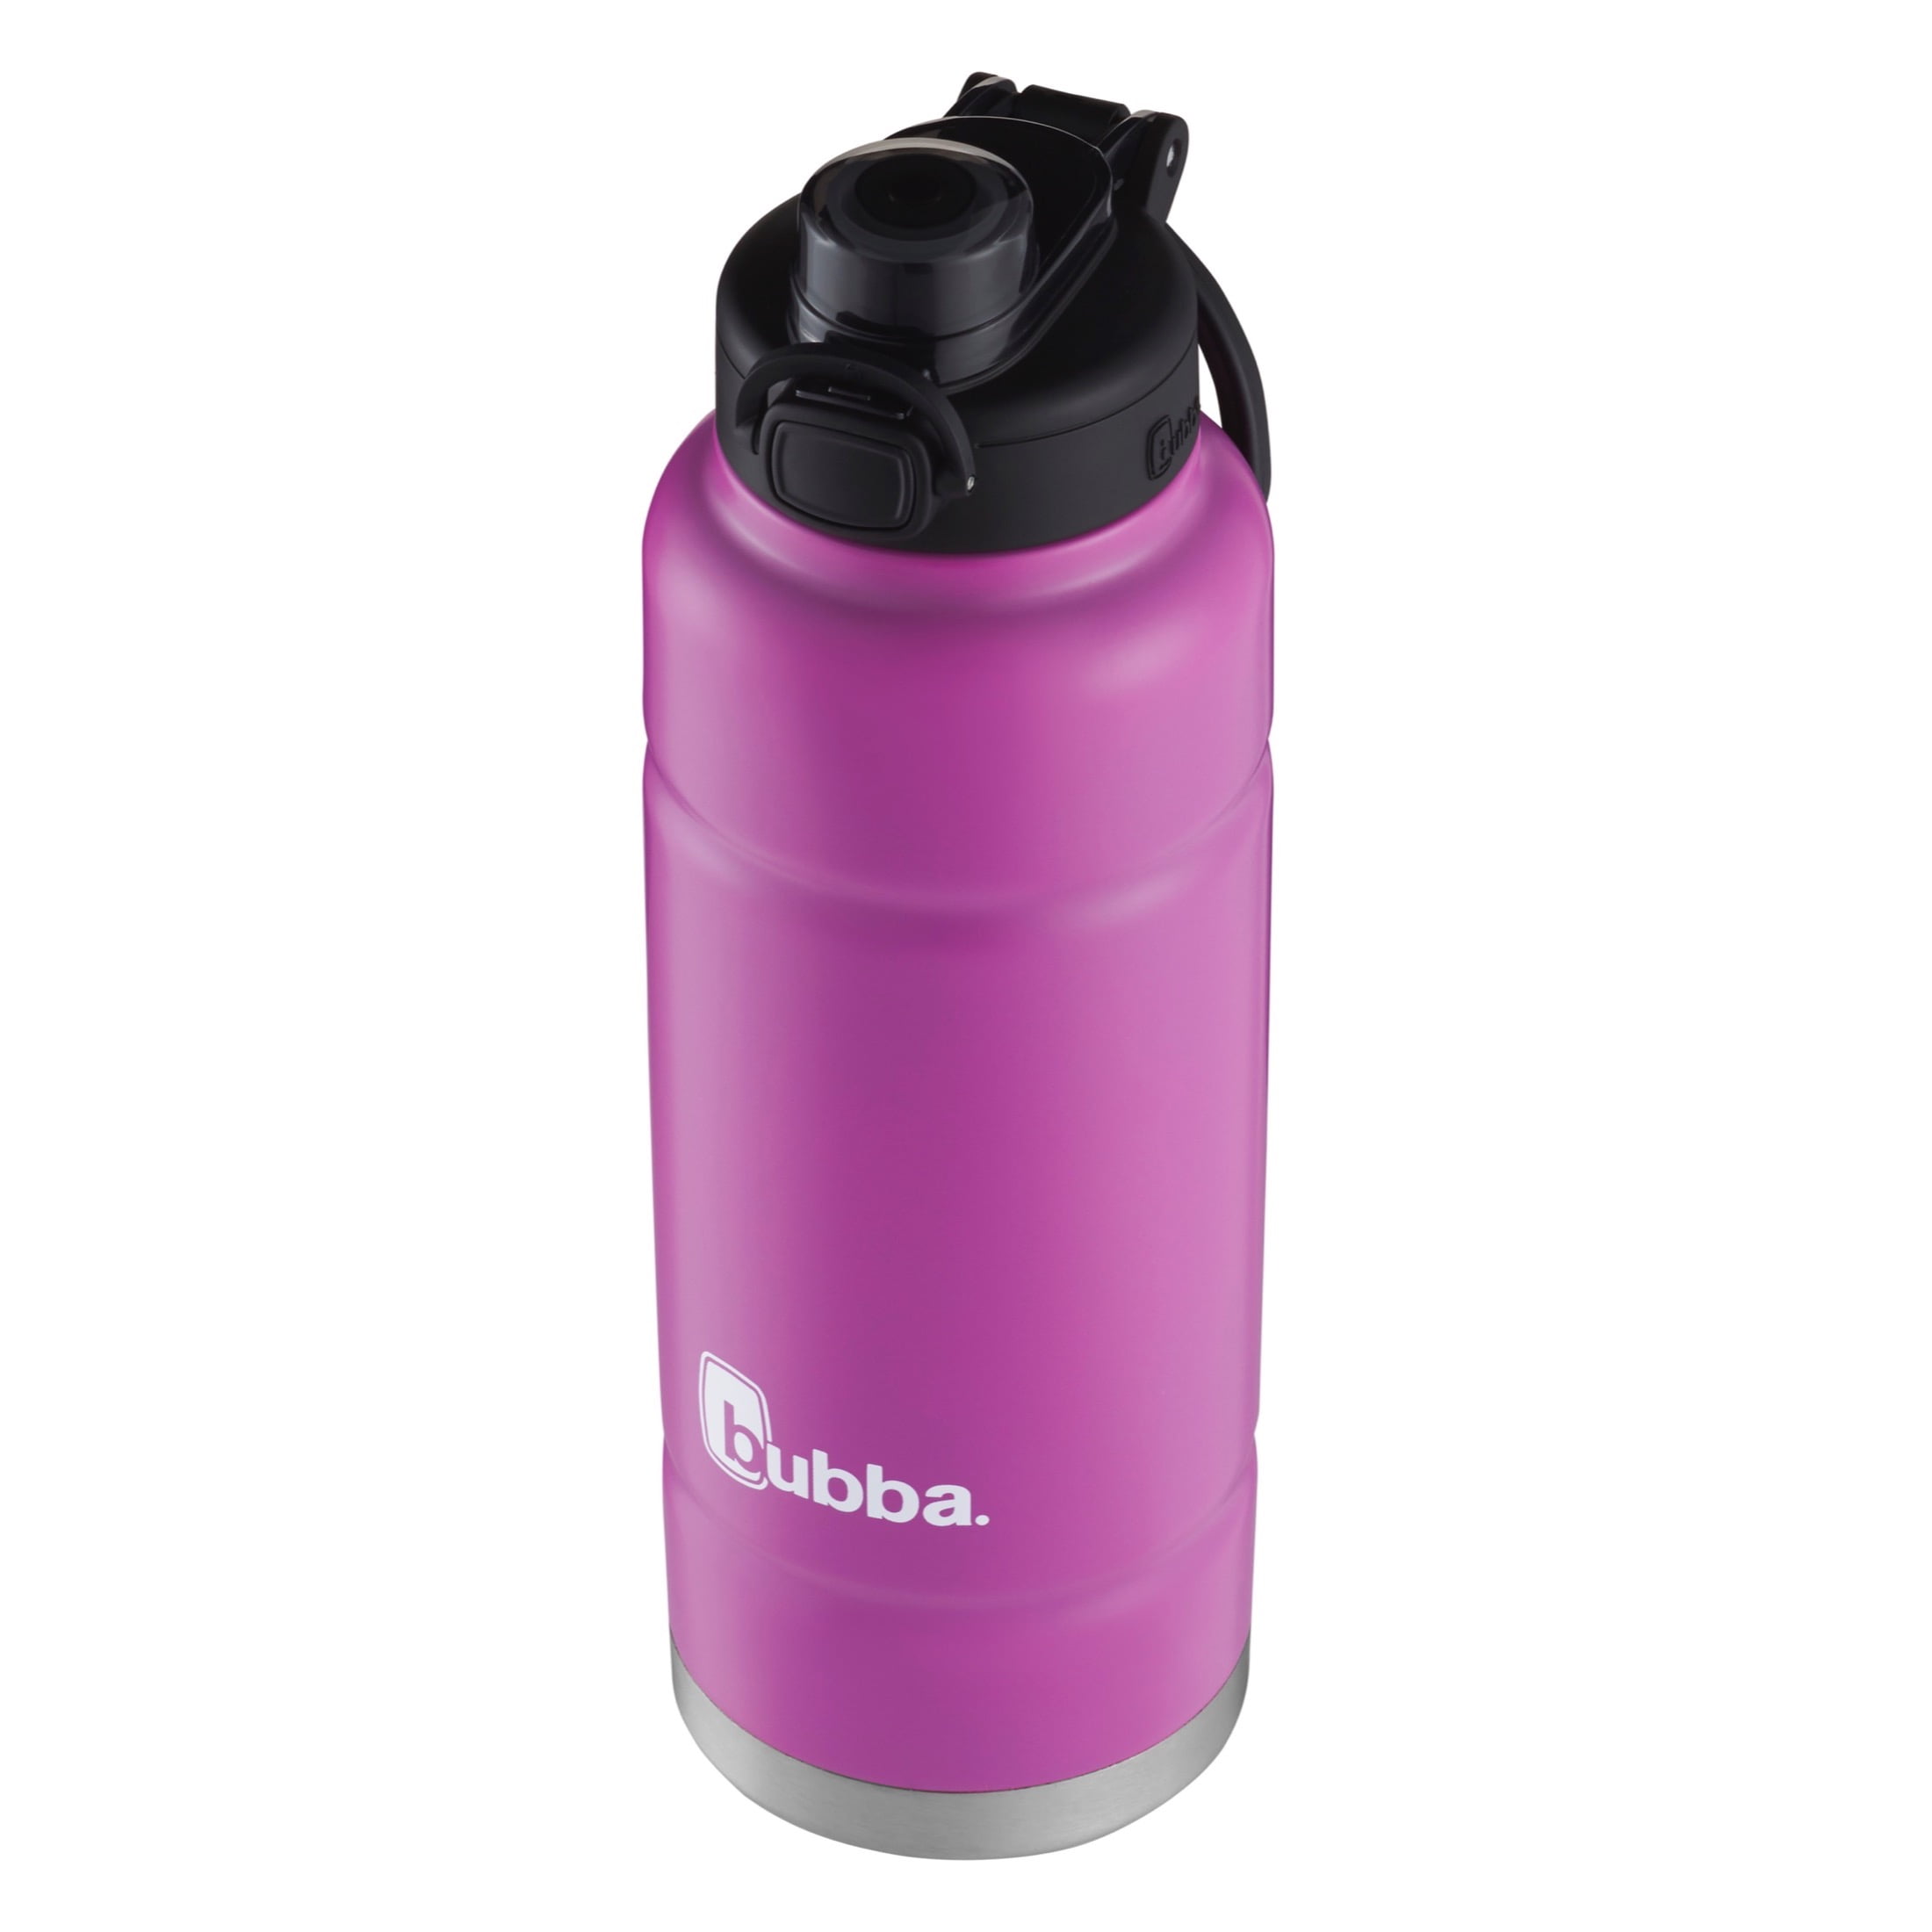 bubba 24 oz HERO sport bottle shocking pink reviews in Misc - ChickAdvisor